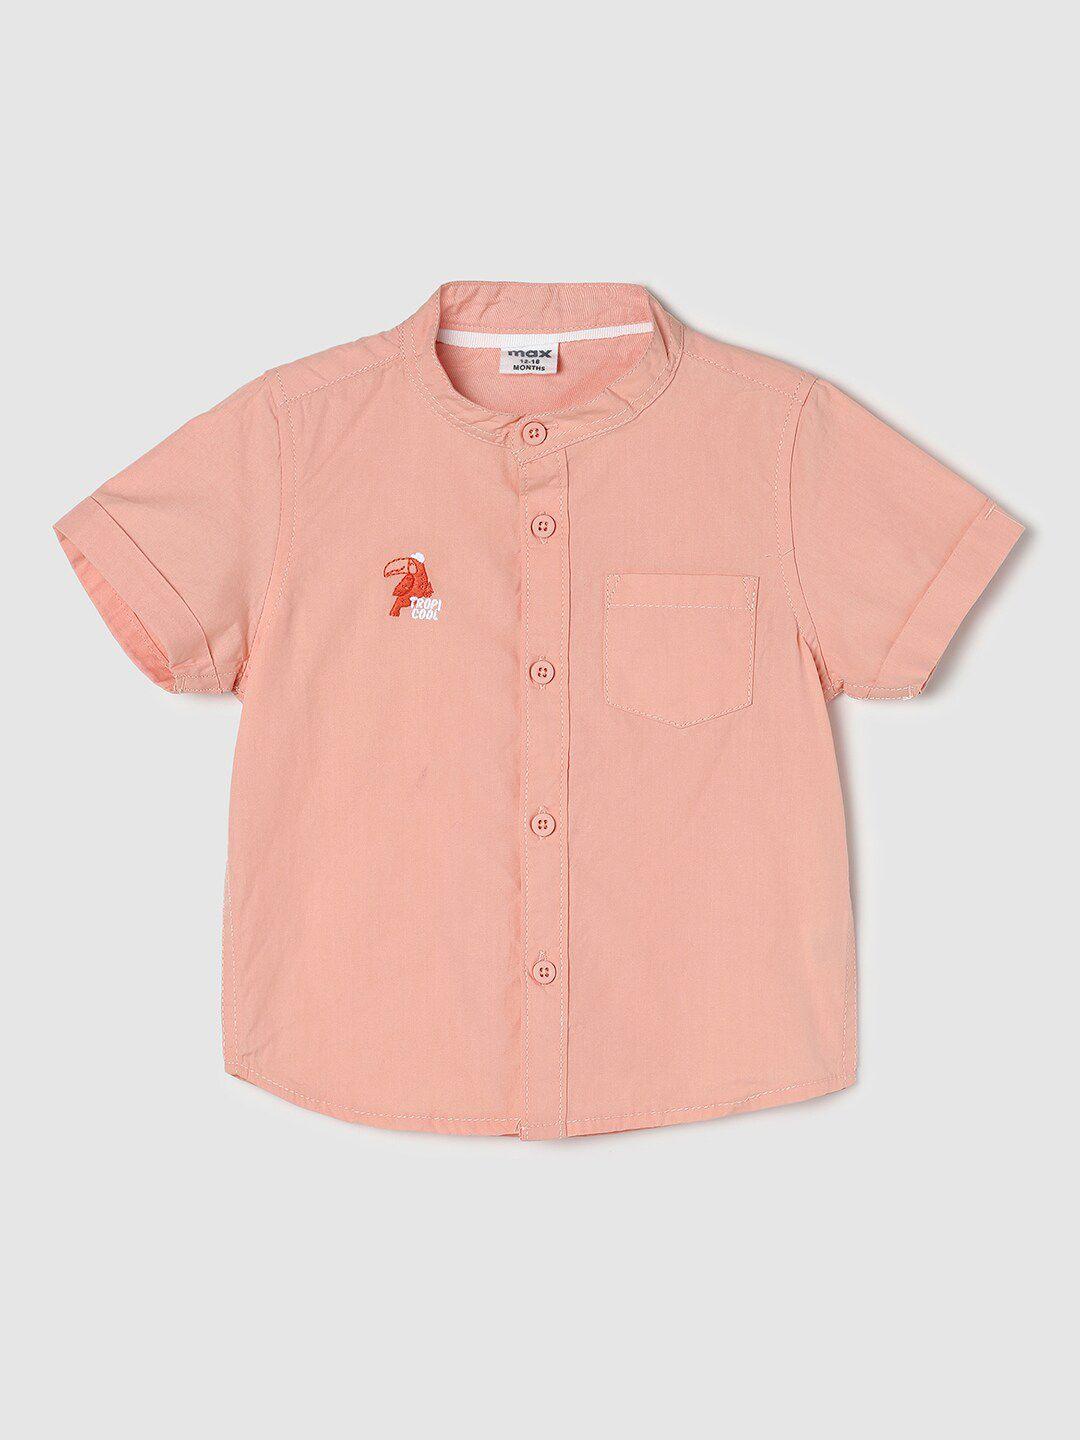 max infant boys mandarin collar cotton casual shirt